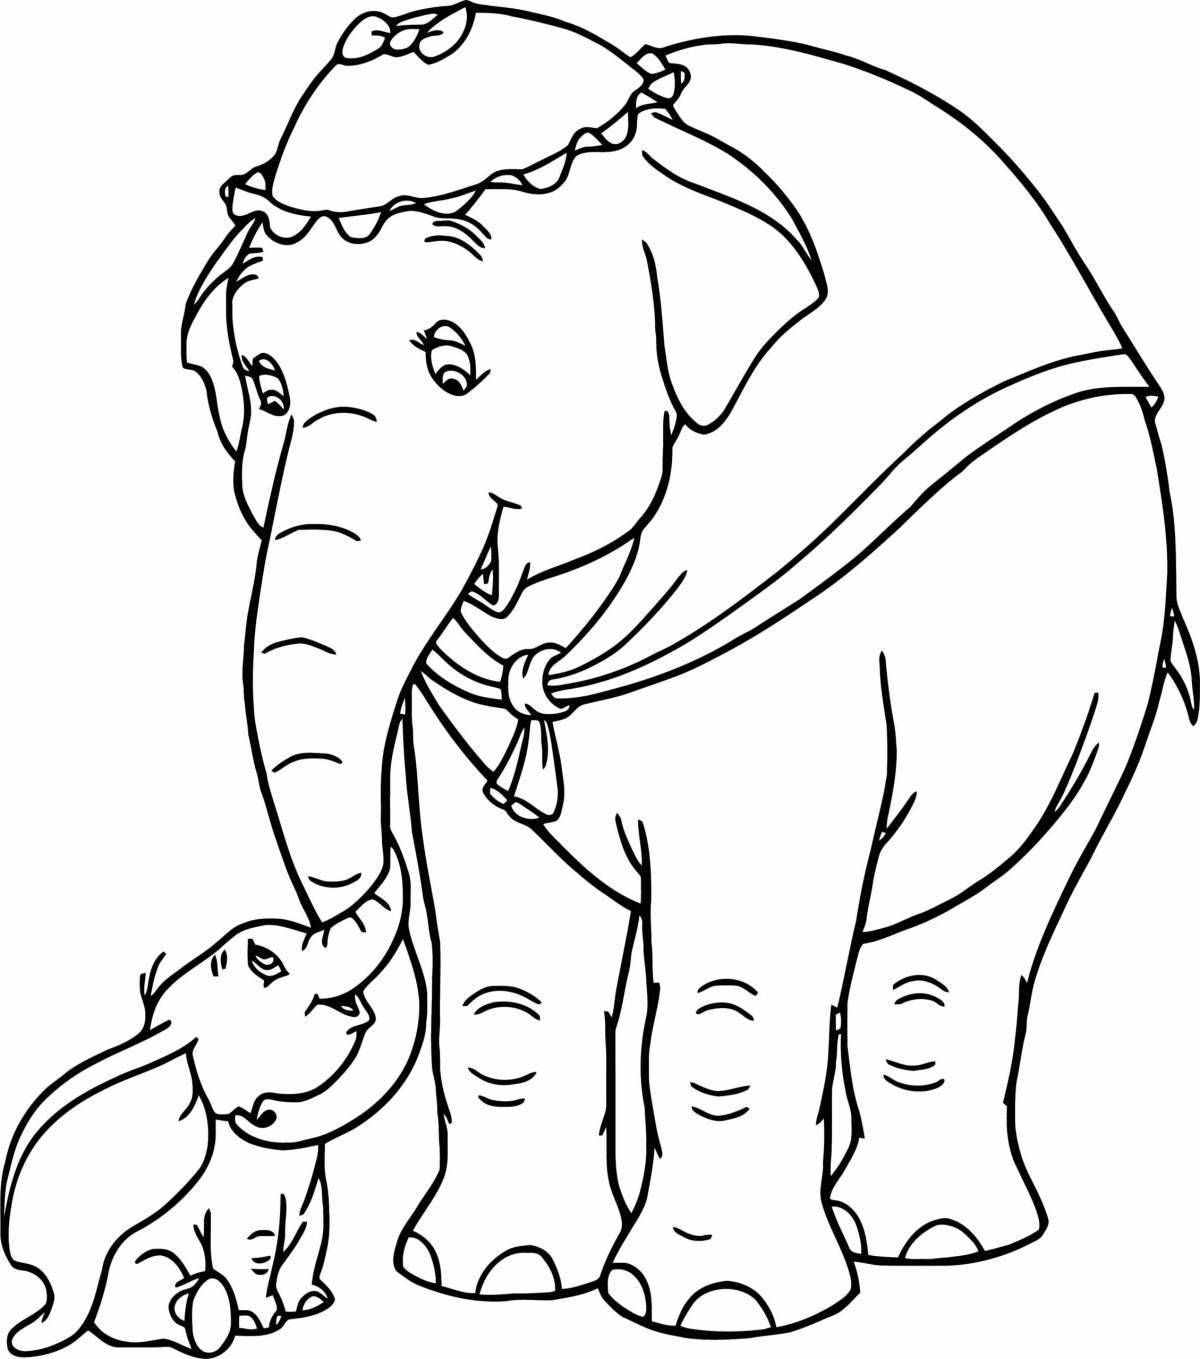 Elephant and girl #3